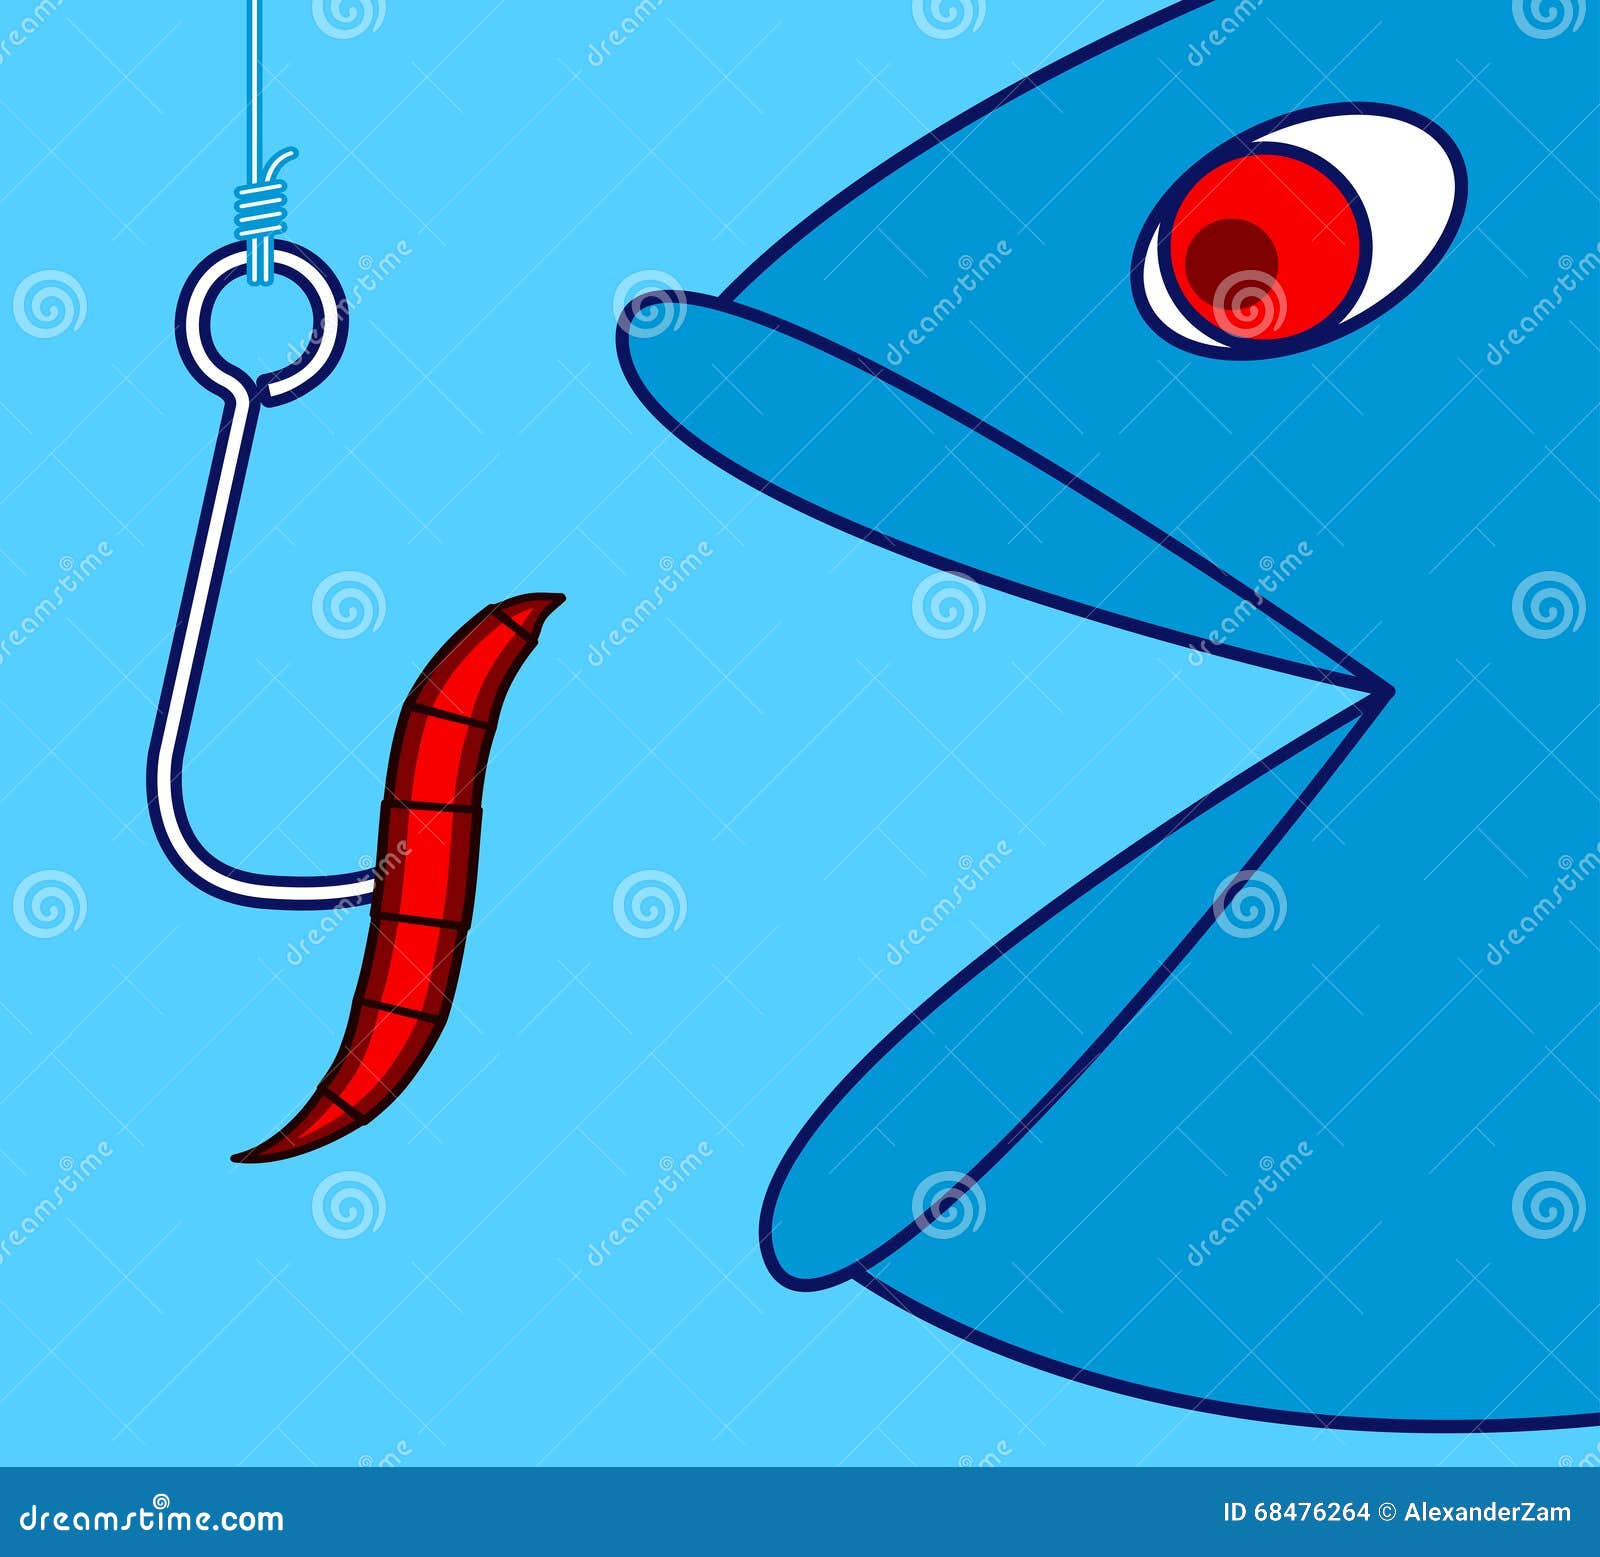 Fishing stock vector. Illustration of fishhook, iron - 68476264